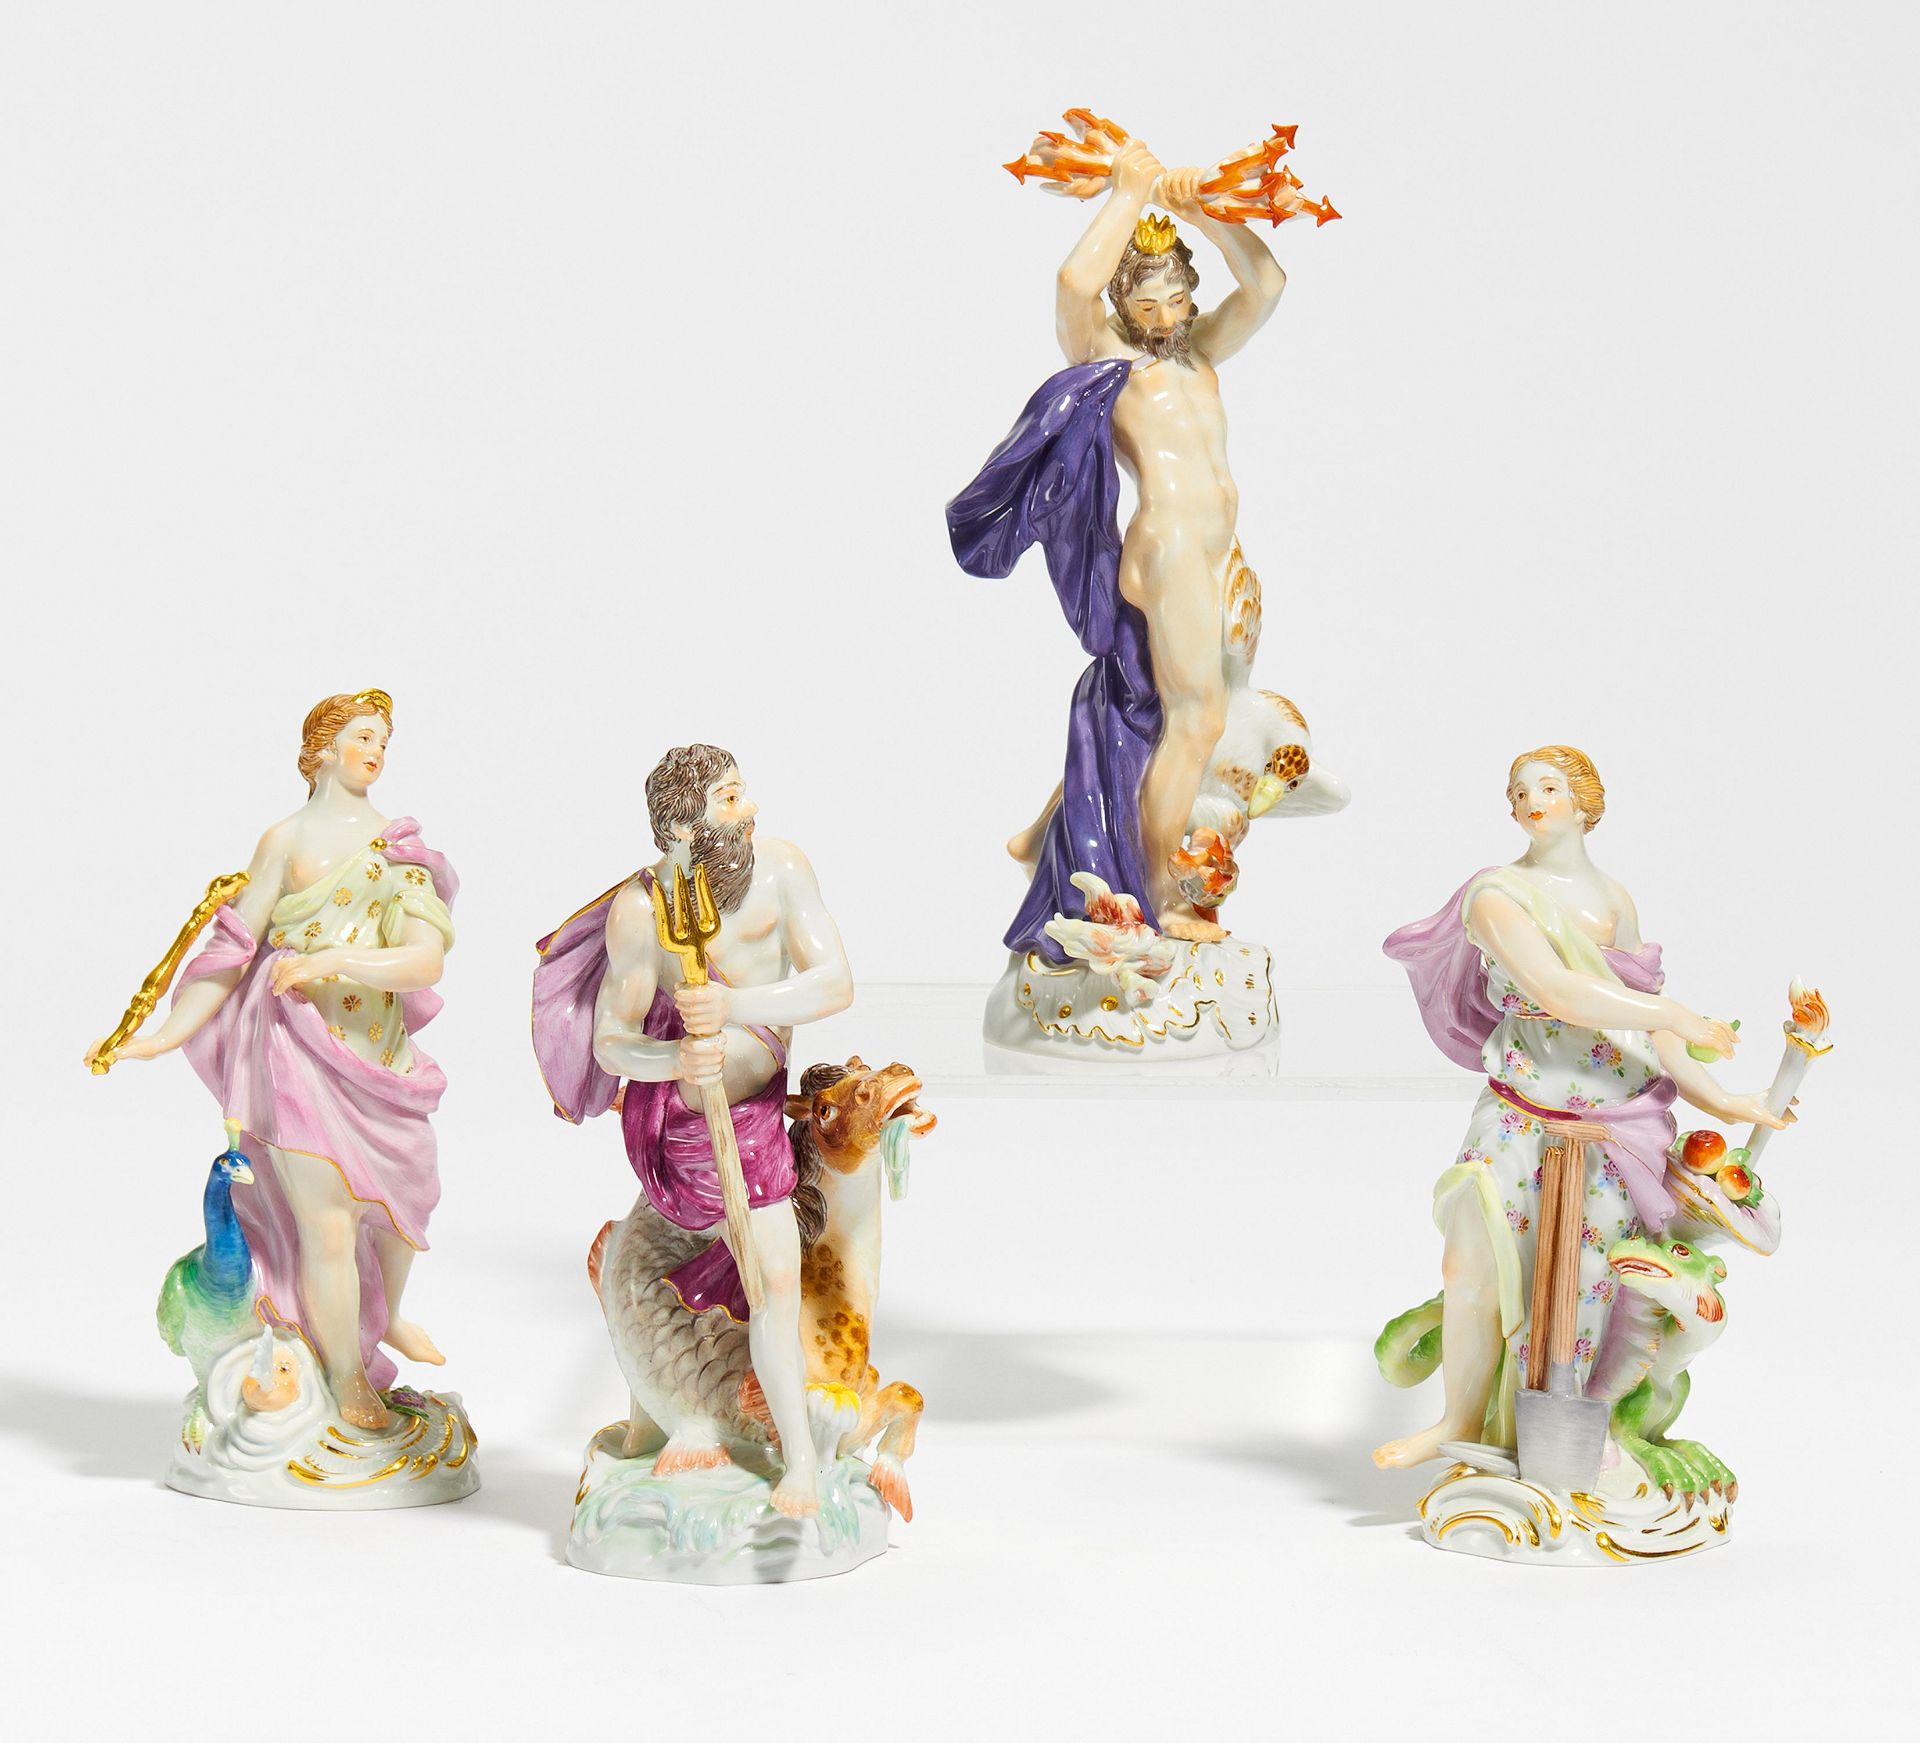 SERIES OF PORCELAIN FIGURES "THE FOUR ELEMENTS". Meissen. Models F.E. Meyer. Porcelain, enriched